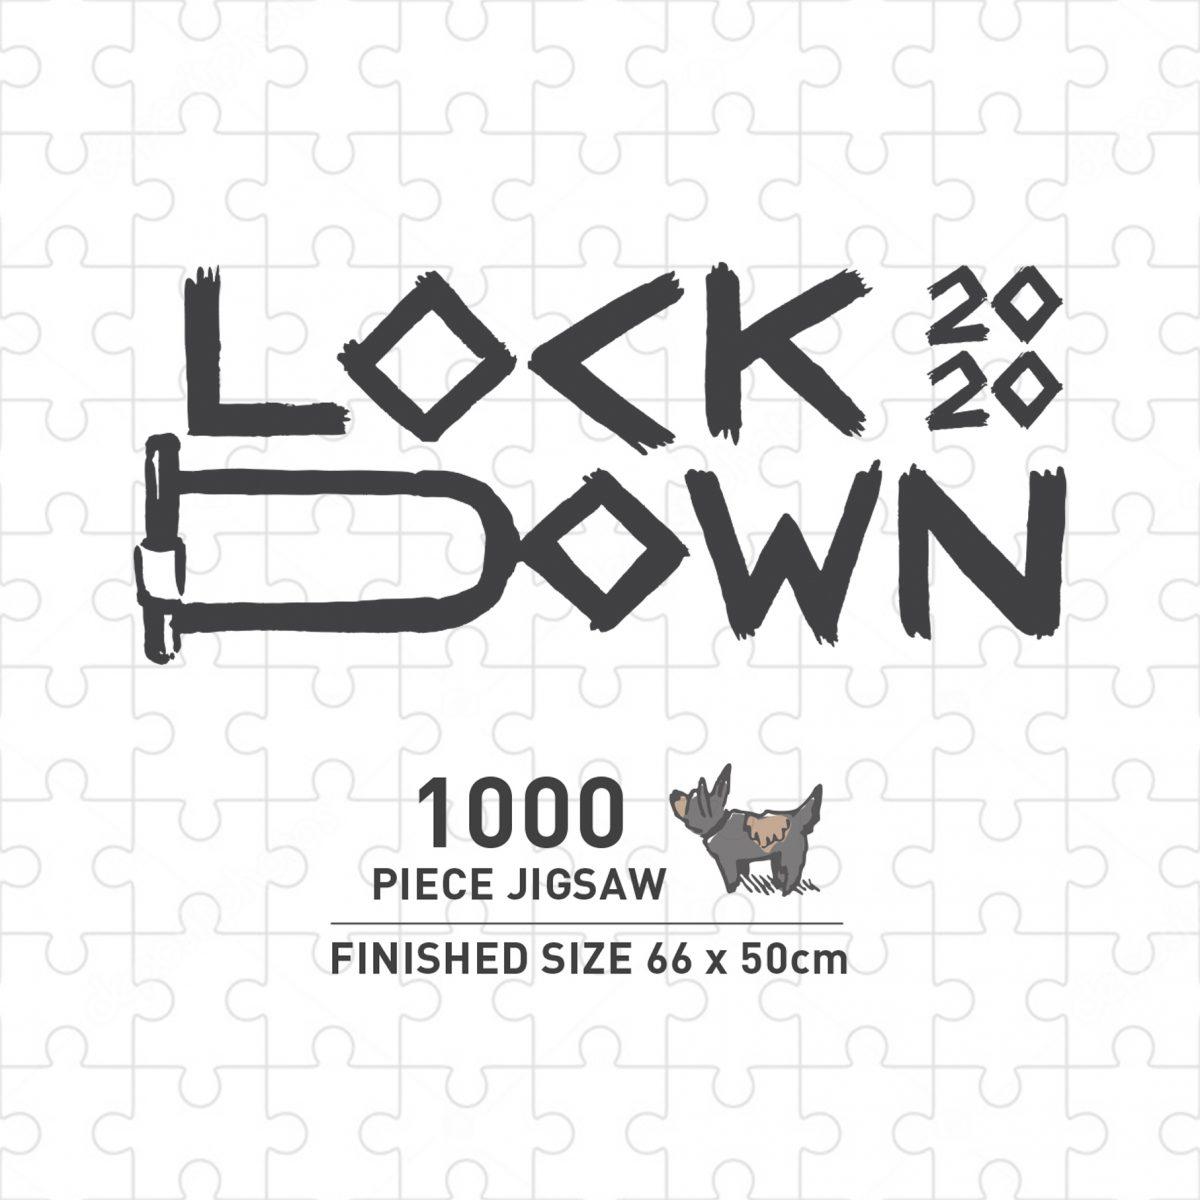 lockdown jigsaw 1000